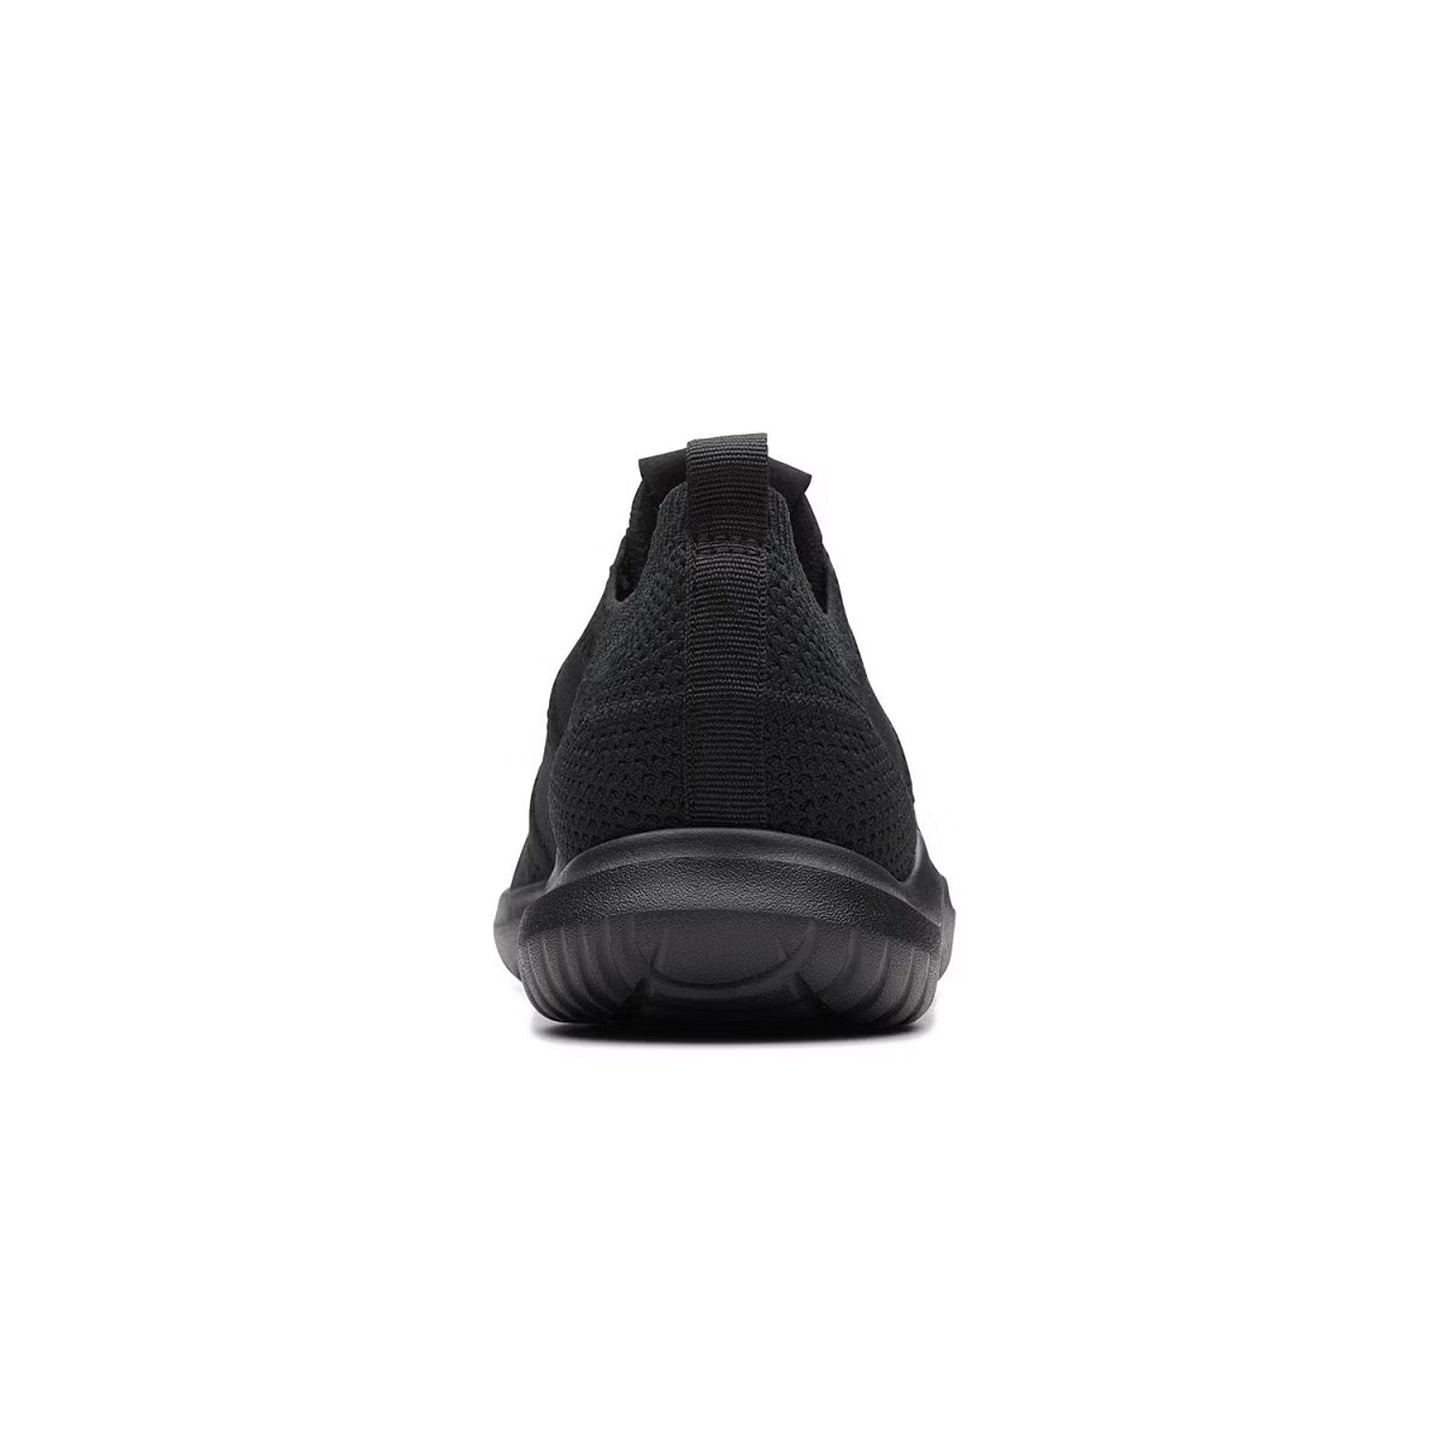 Clarks NovaLite Lace Black Knit Casual Shoe - Best Price online Prokicksports.com